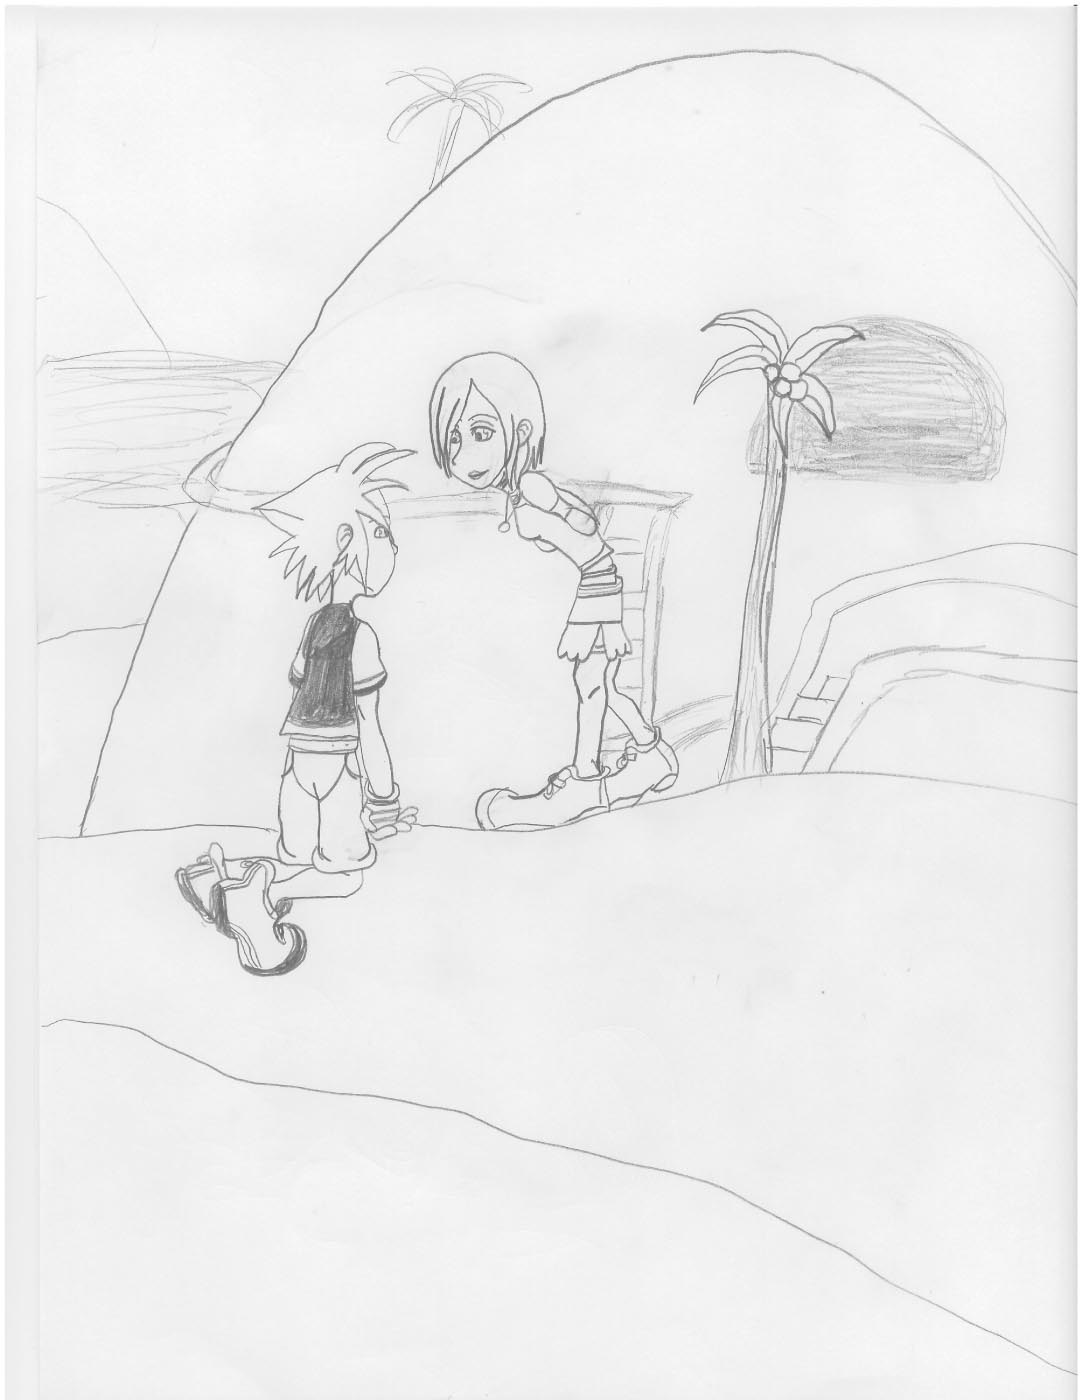 Kairi and Sora on Destiny Islands by Riku_Heartless13